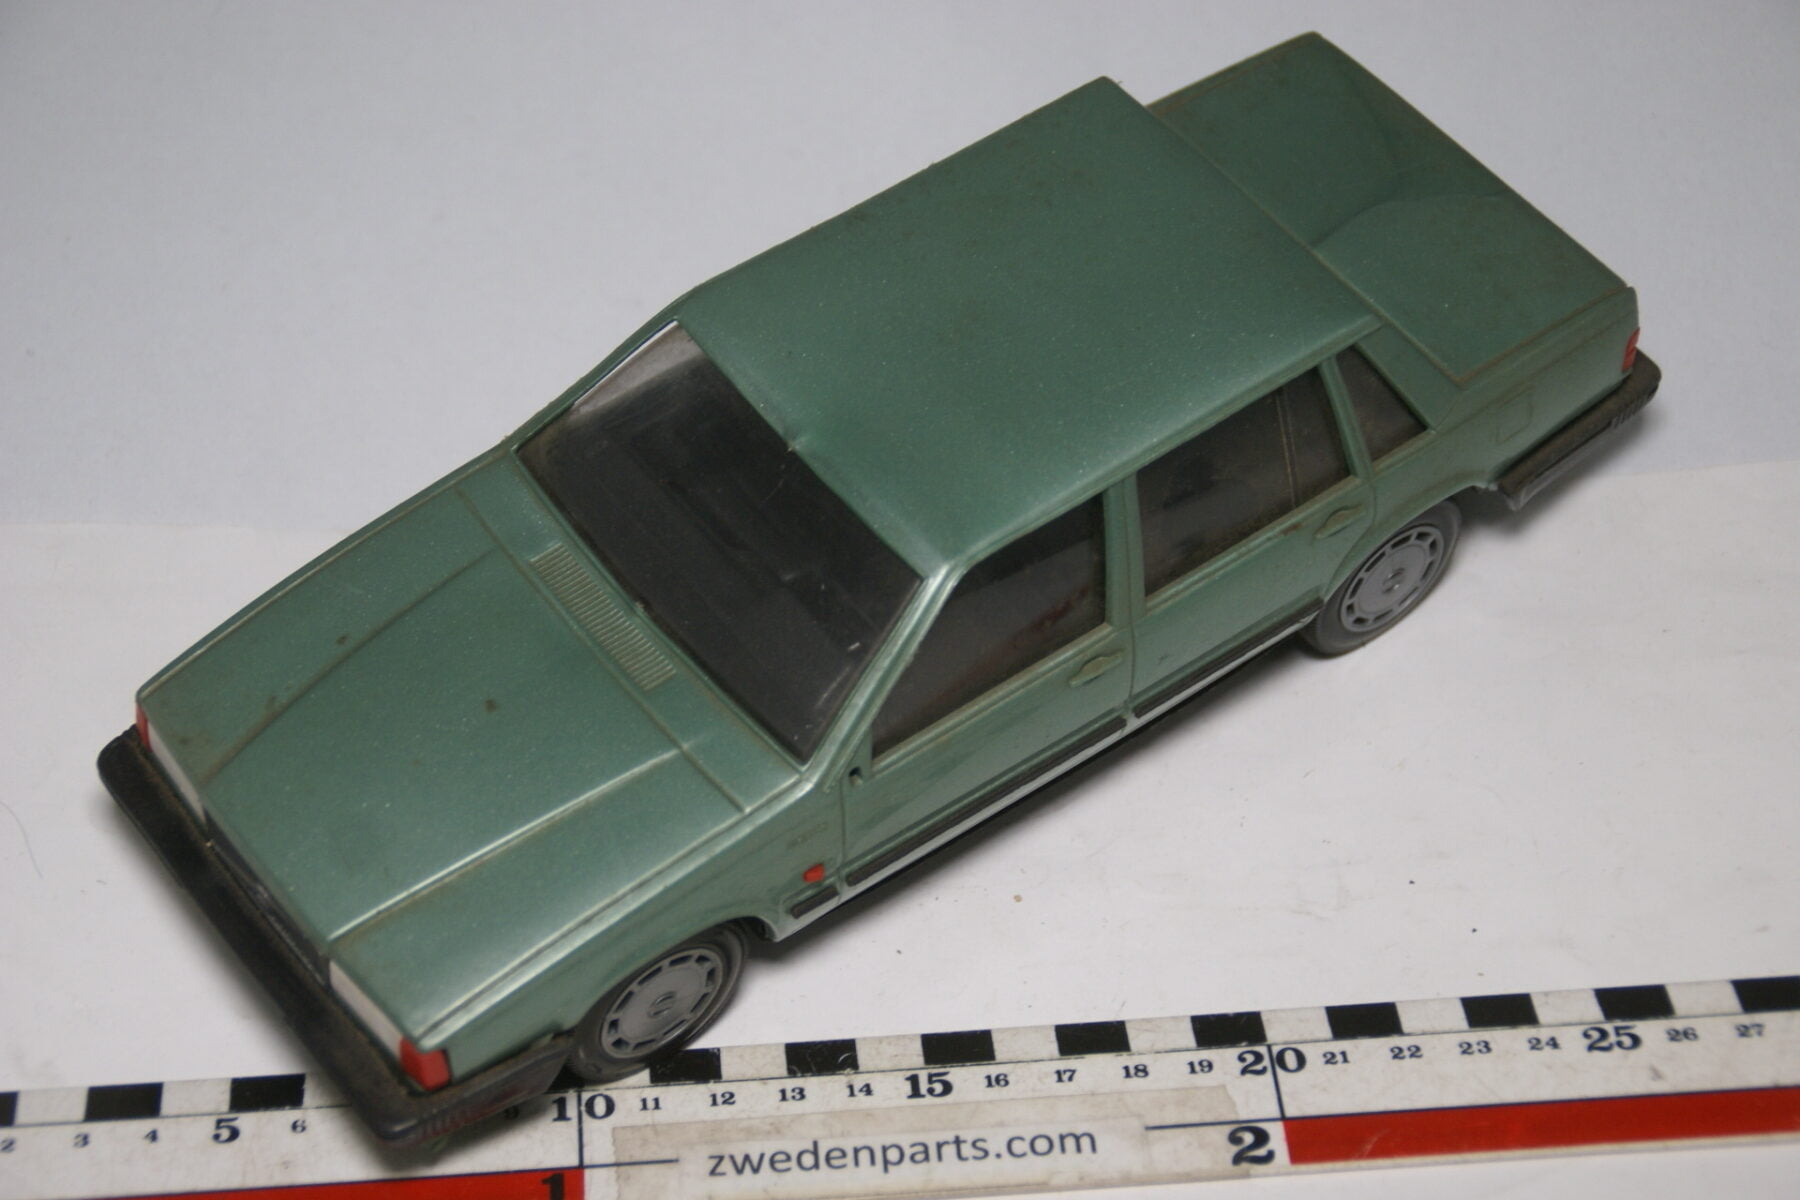 DSC09129 miniatuur Stahlberg Made in Finland Volvo 760GLE groen m ca 1 op 18